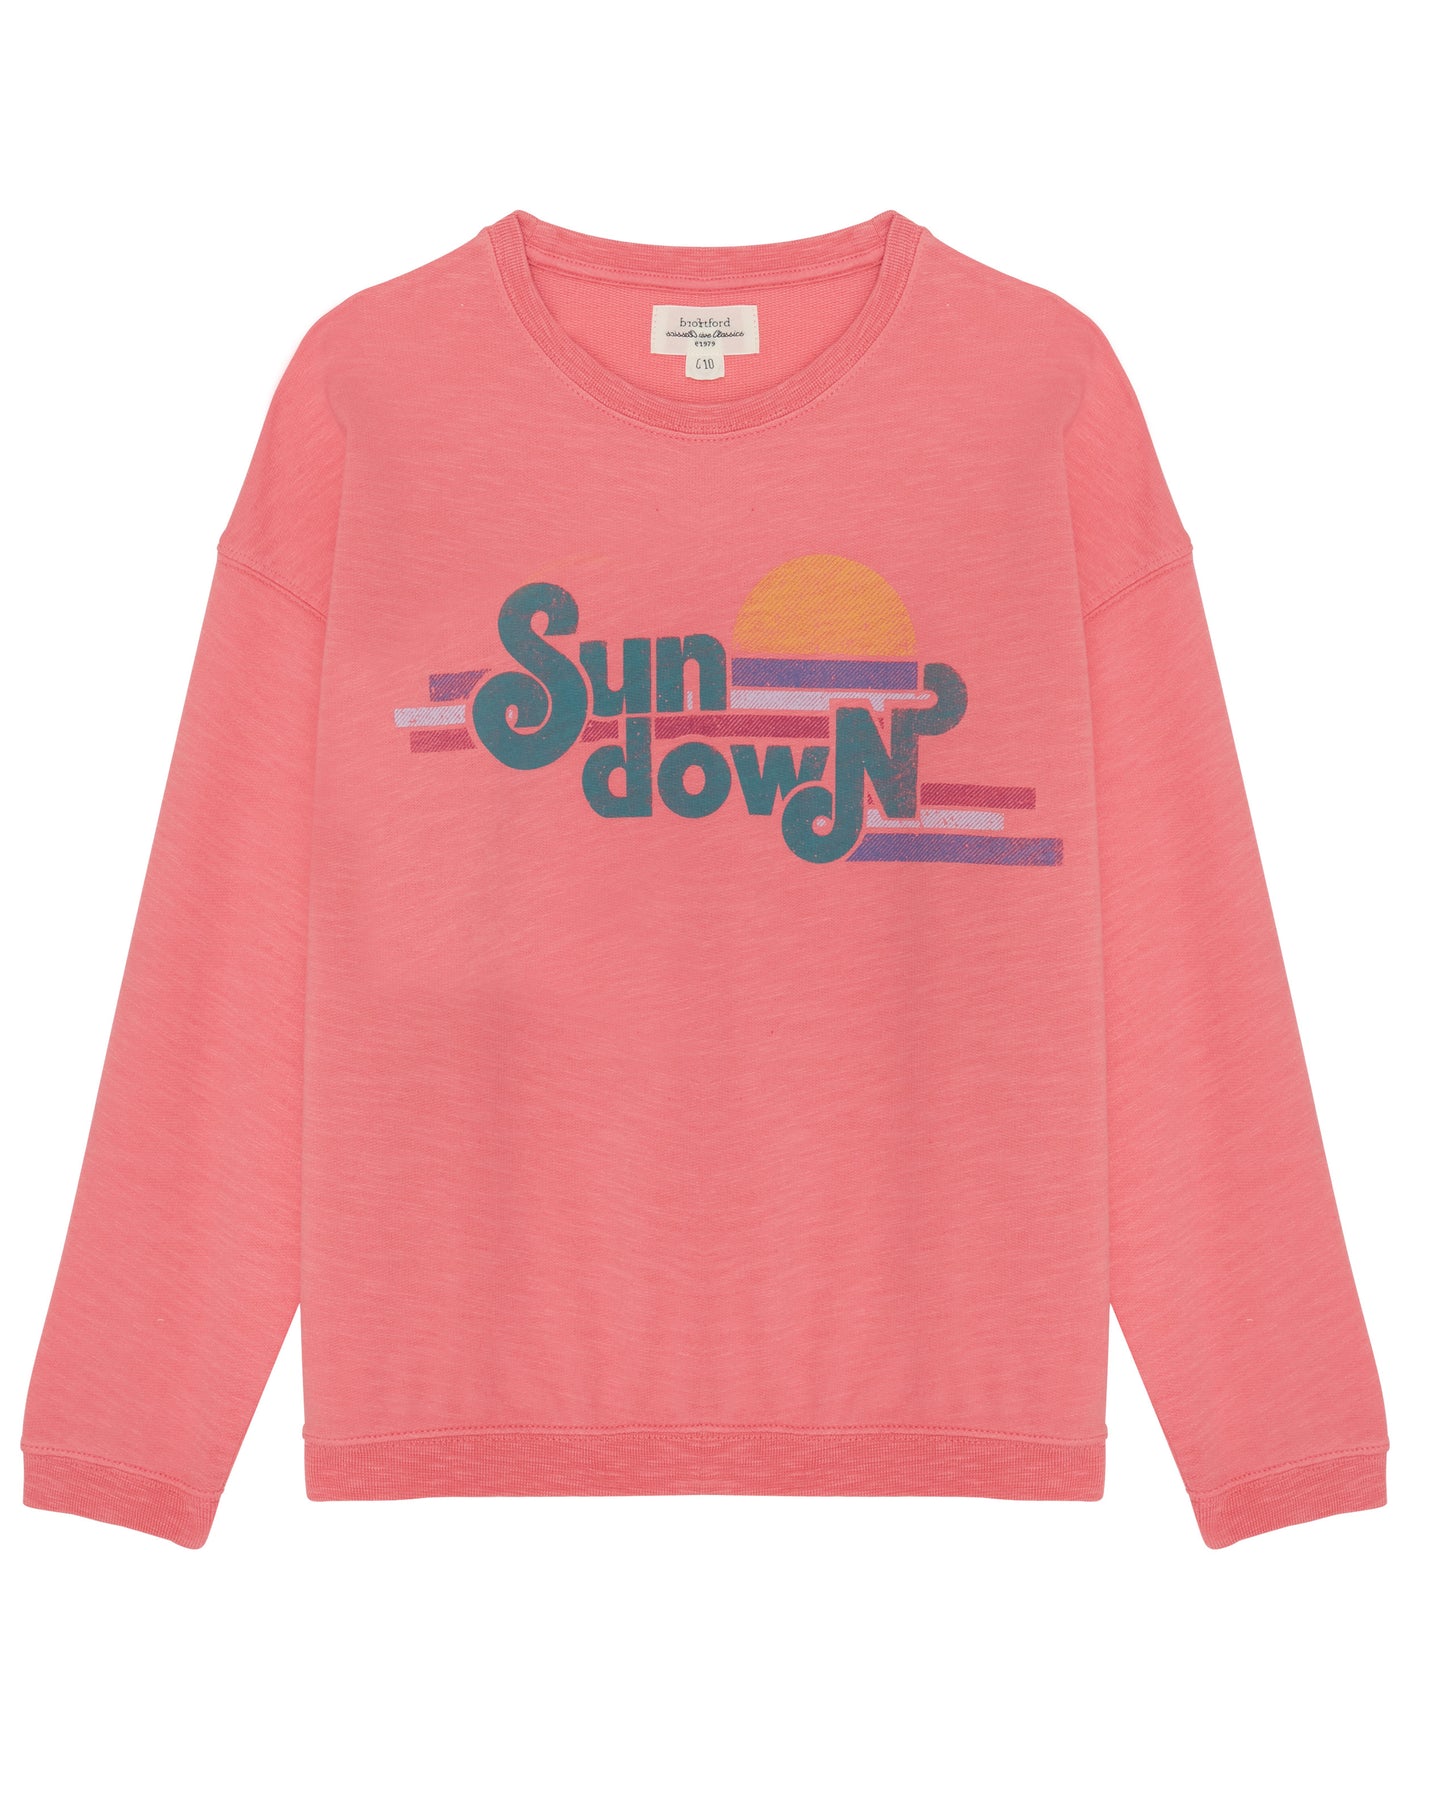 Tarfa Girls' Printed Pink Light Cotton Fleece Sweatshirt